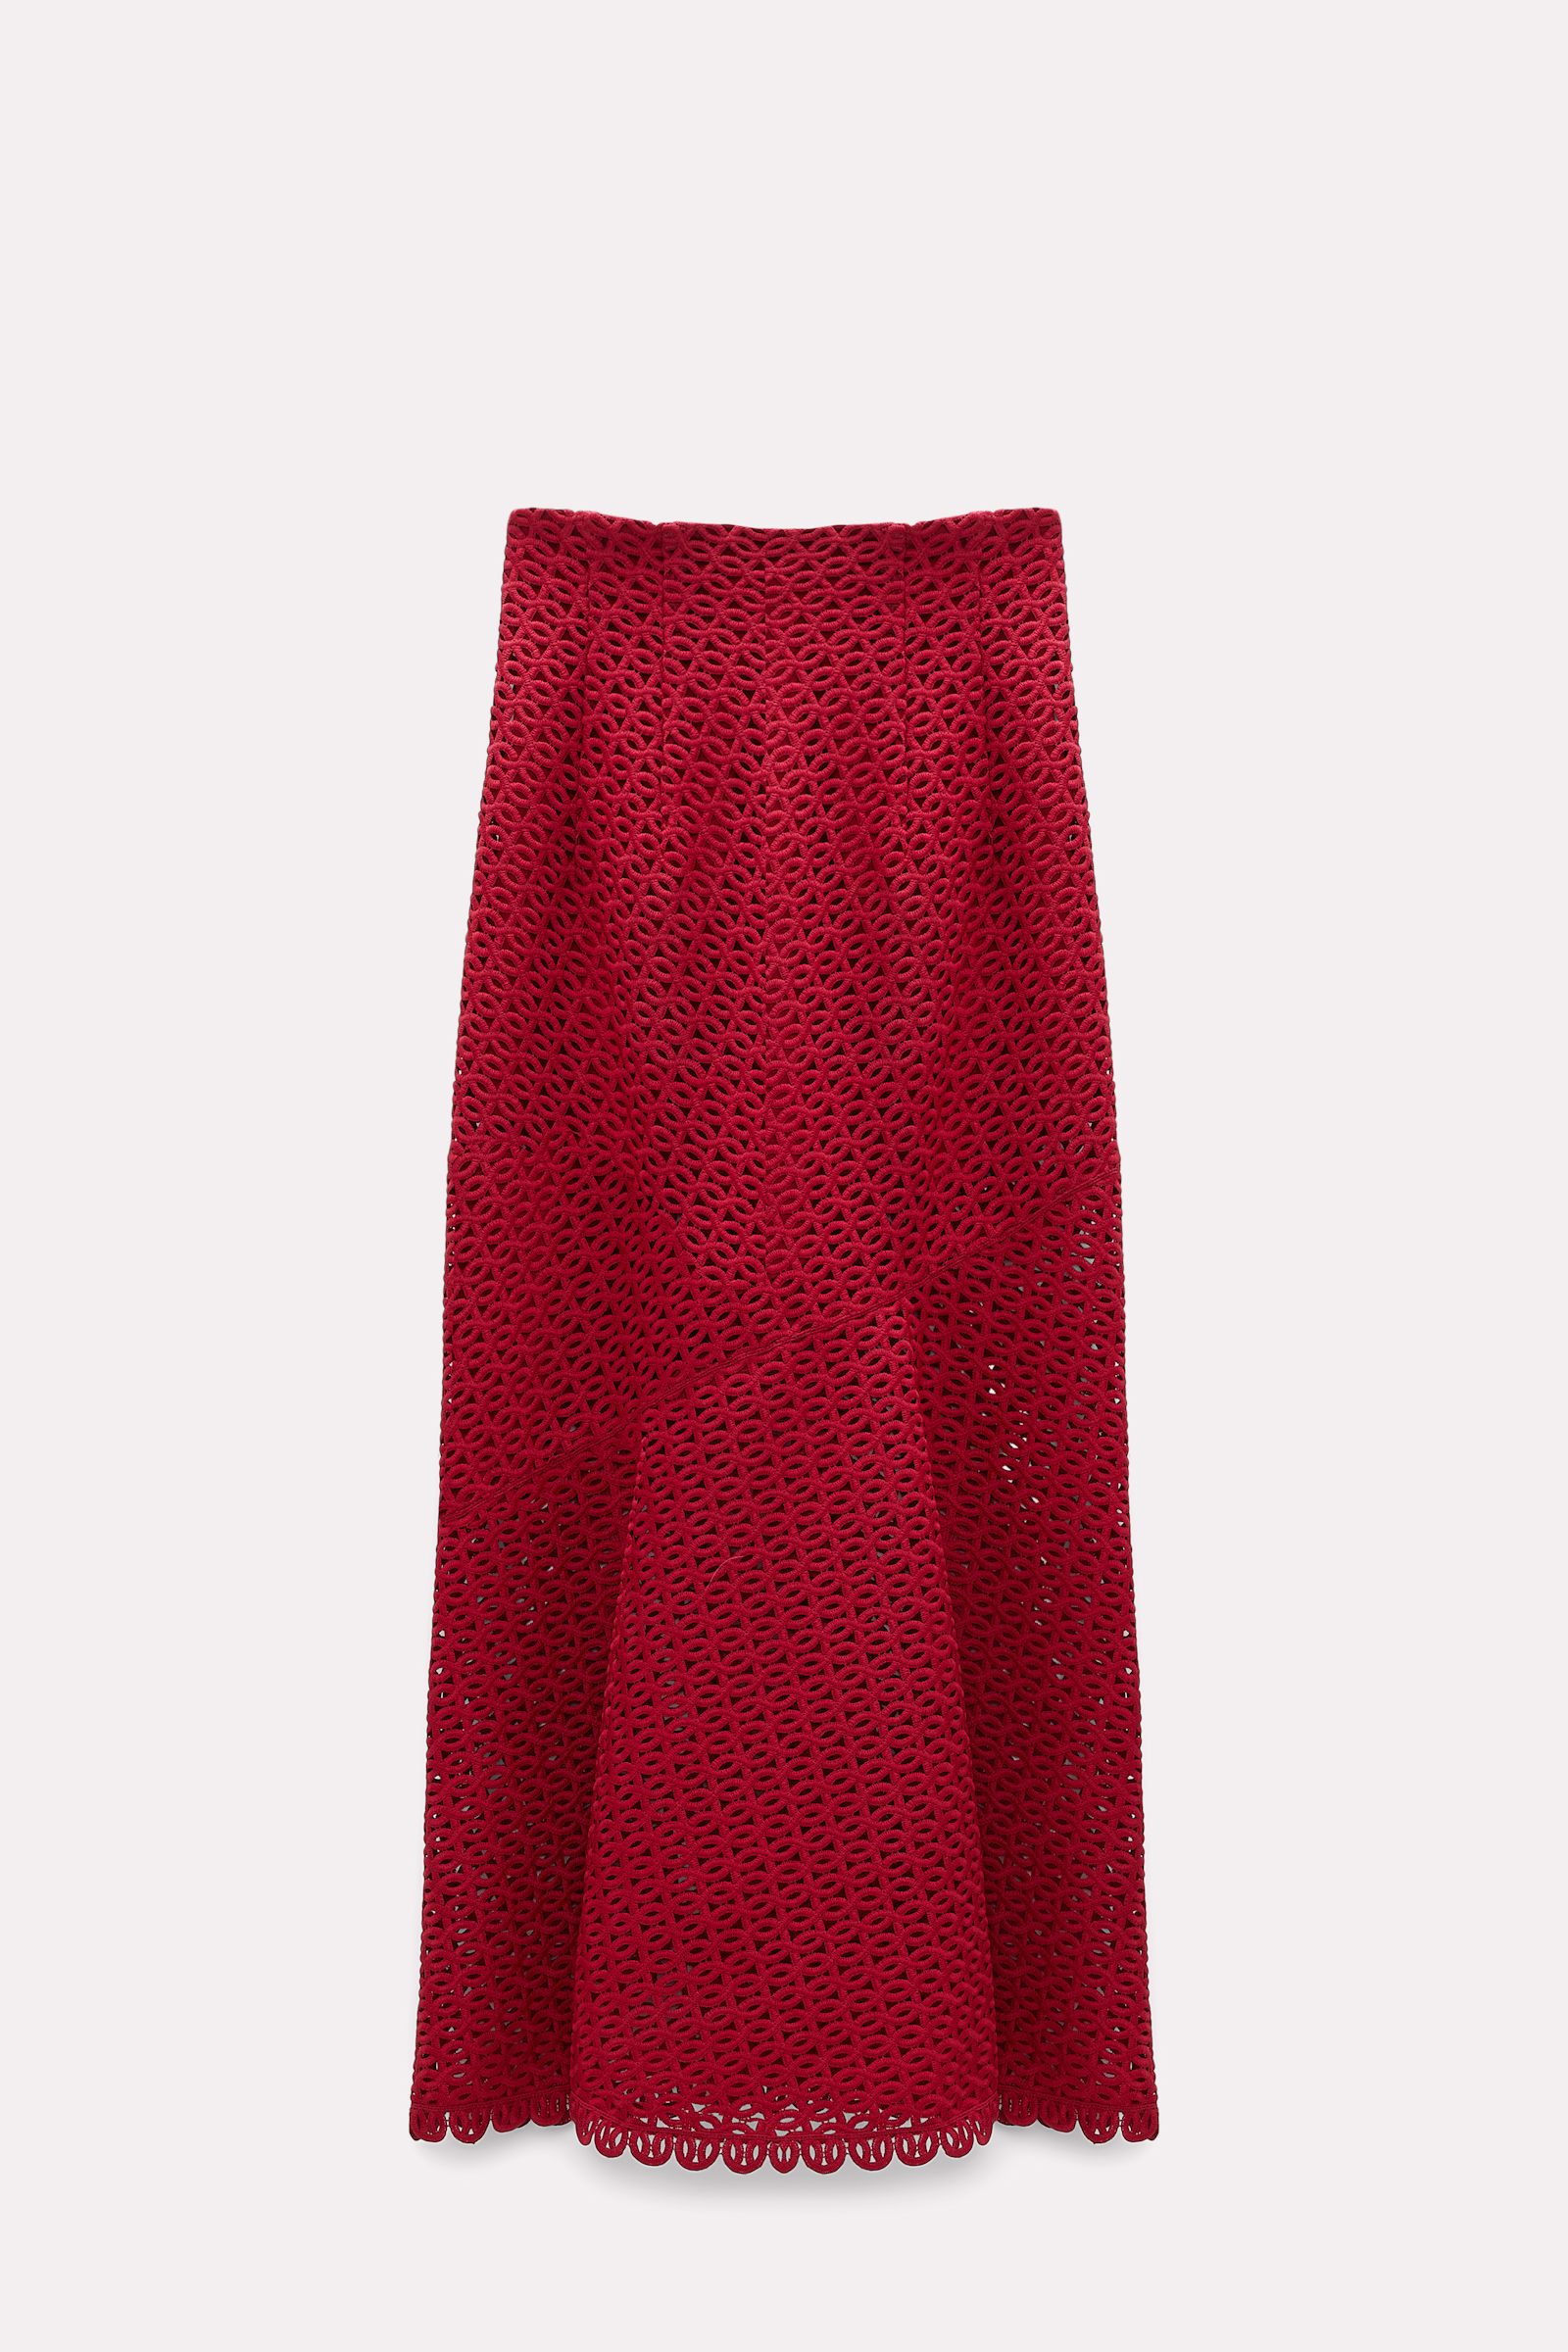 Dorothee Schumacher Macramé lace skirt soft red